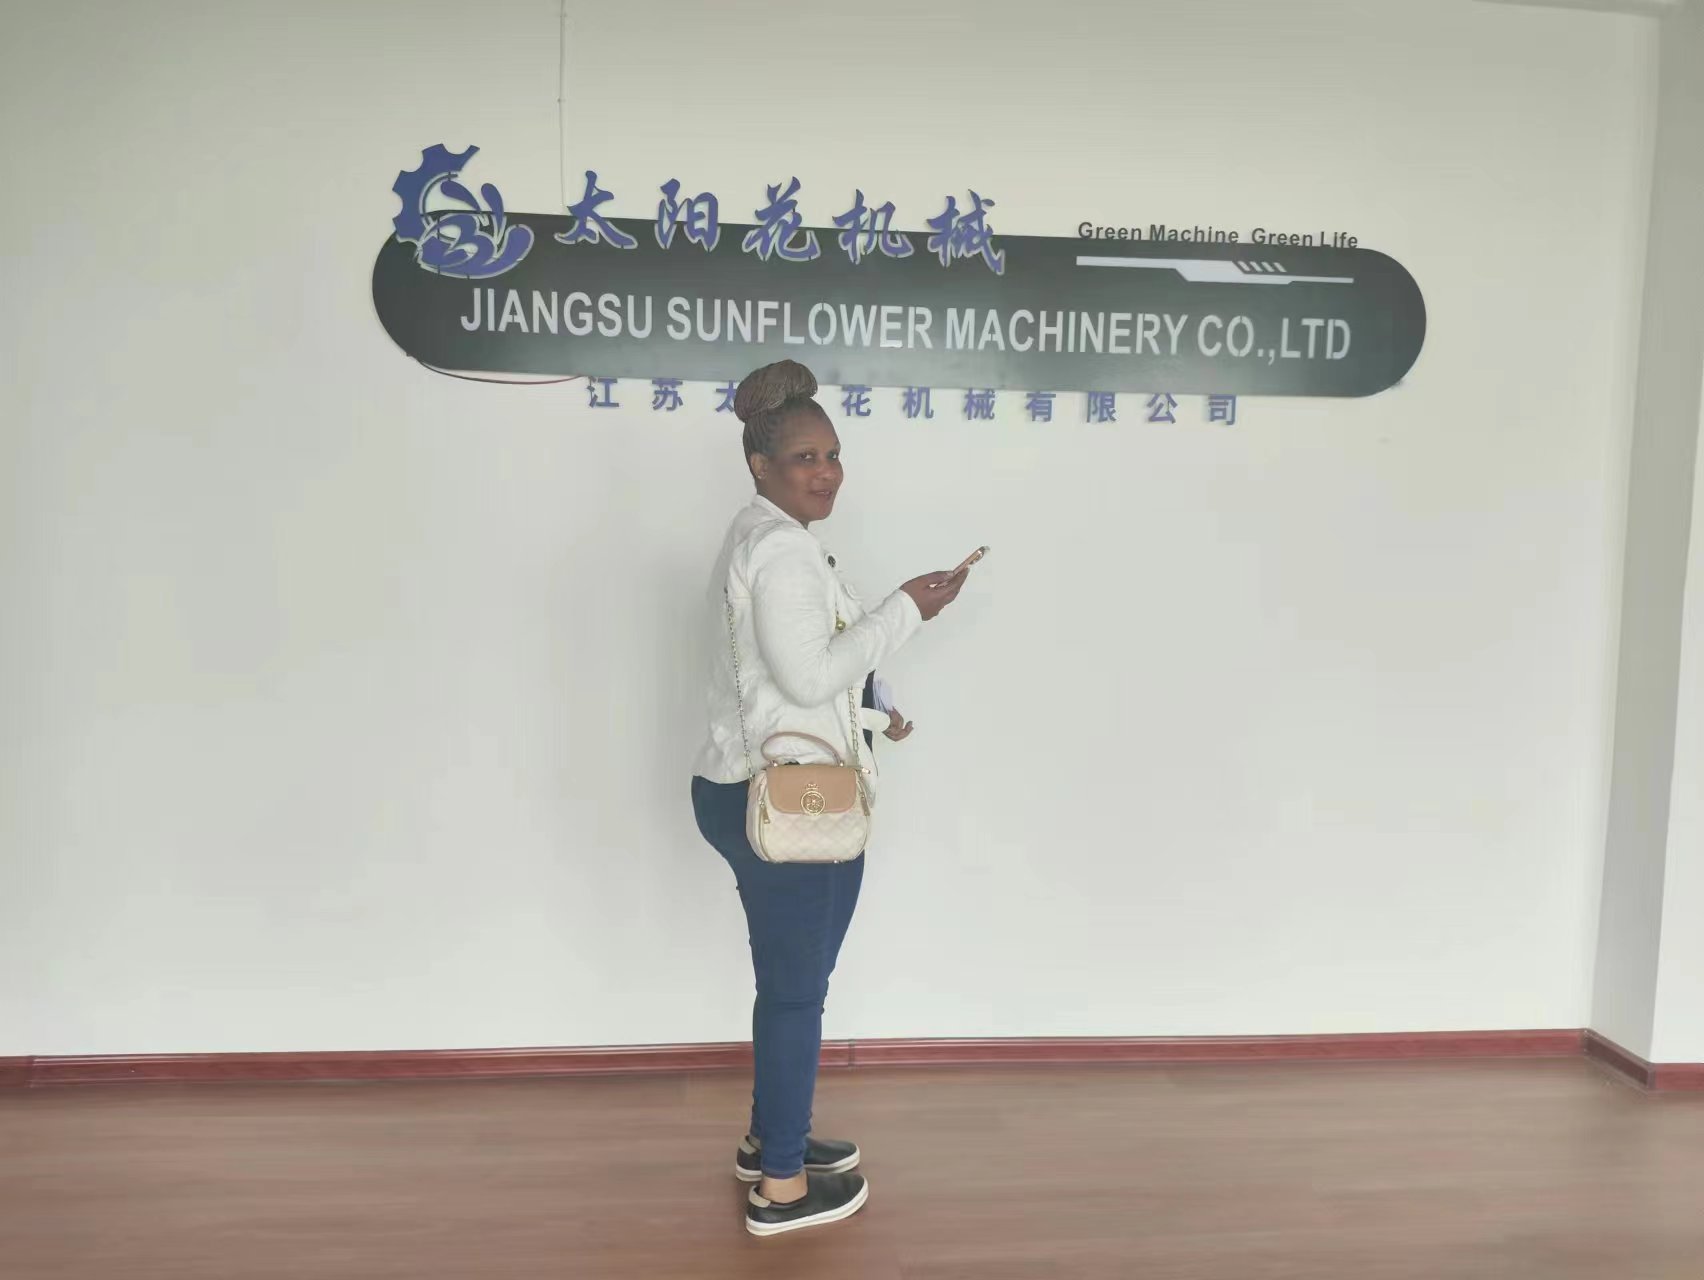 Tanzania customer visit Jiangsu Sunflower Machinery Co., Ltd 